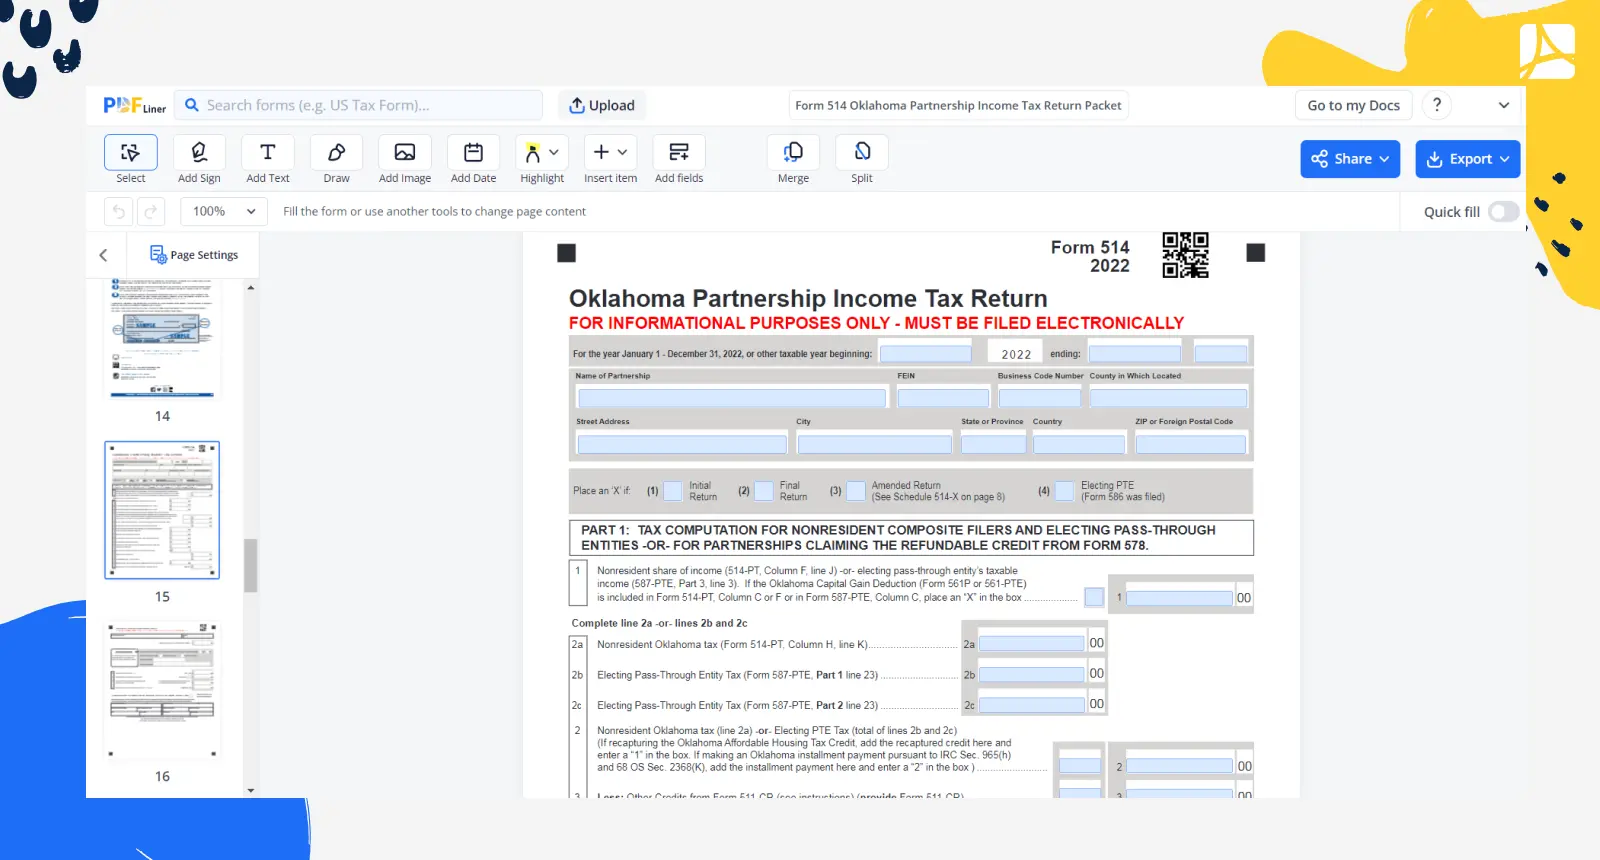 Form 514 Oklahoma Partnership Income Tax Return Packet Screenshot